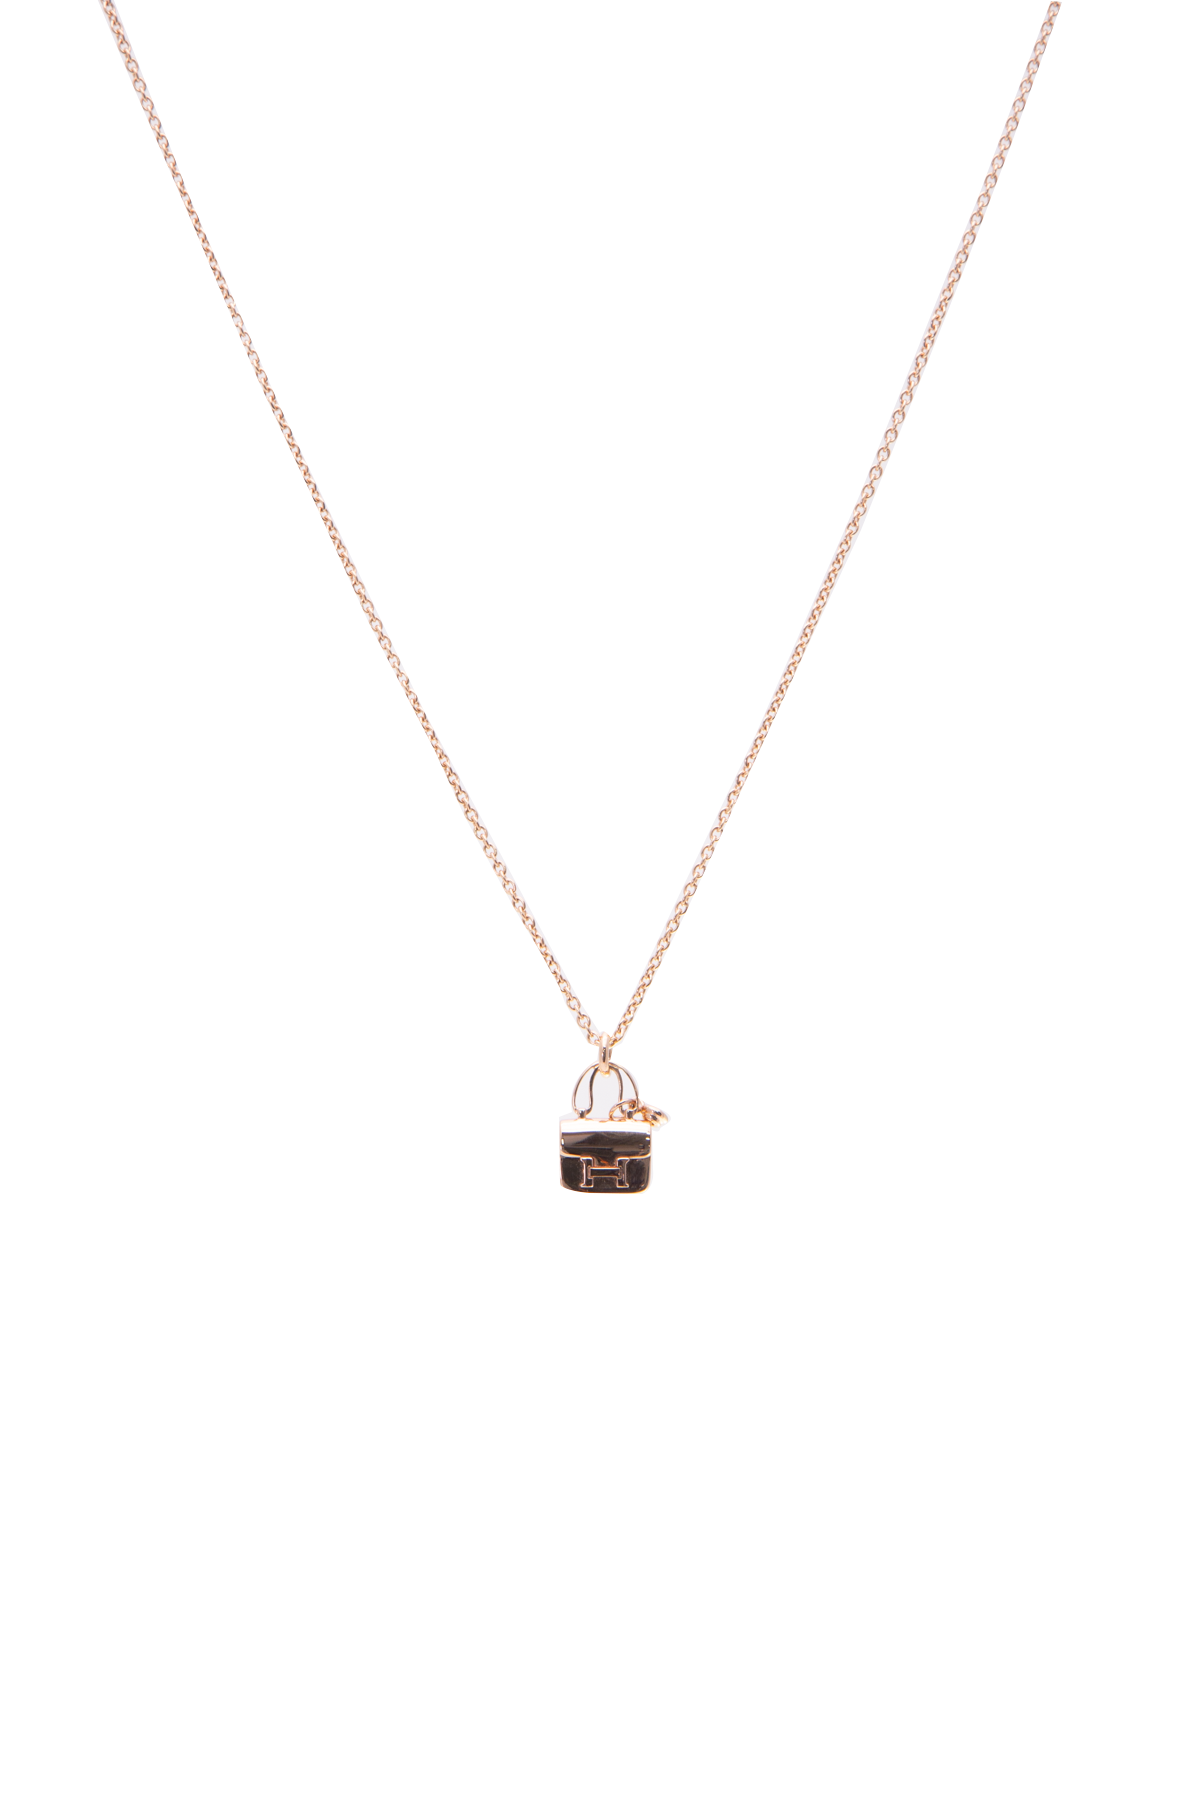 Hermes Birkin Amulette Diamond 18k Rose Gold Pendant Necklace Hermes | TLC